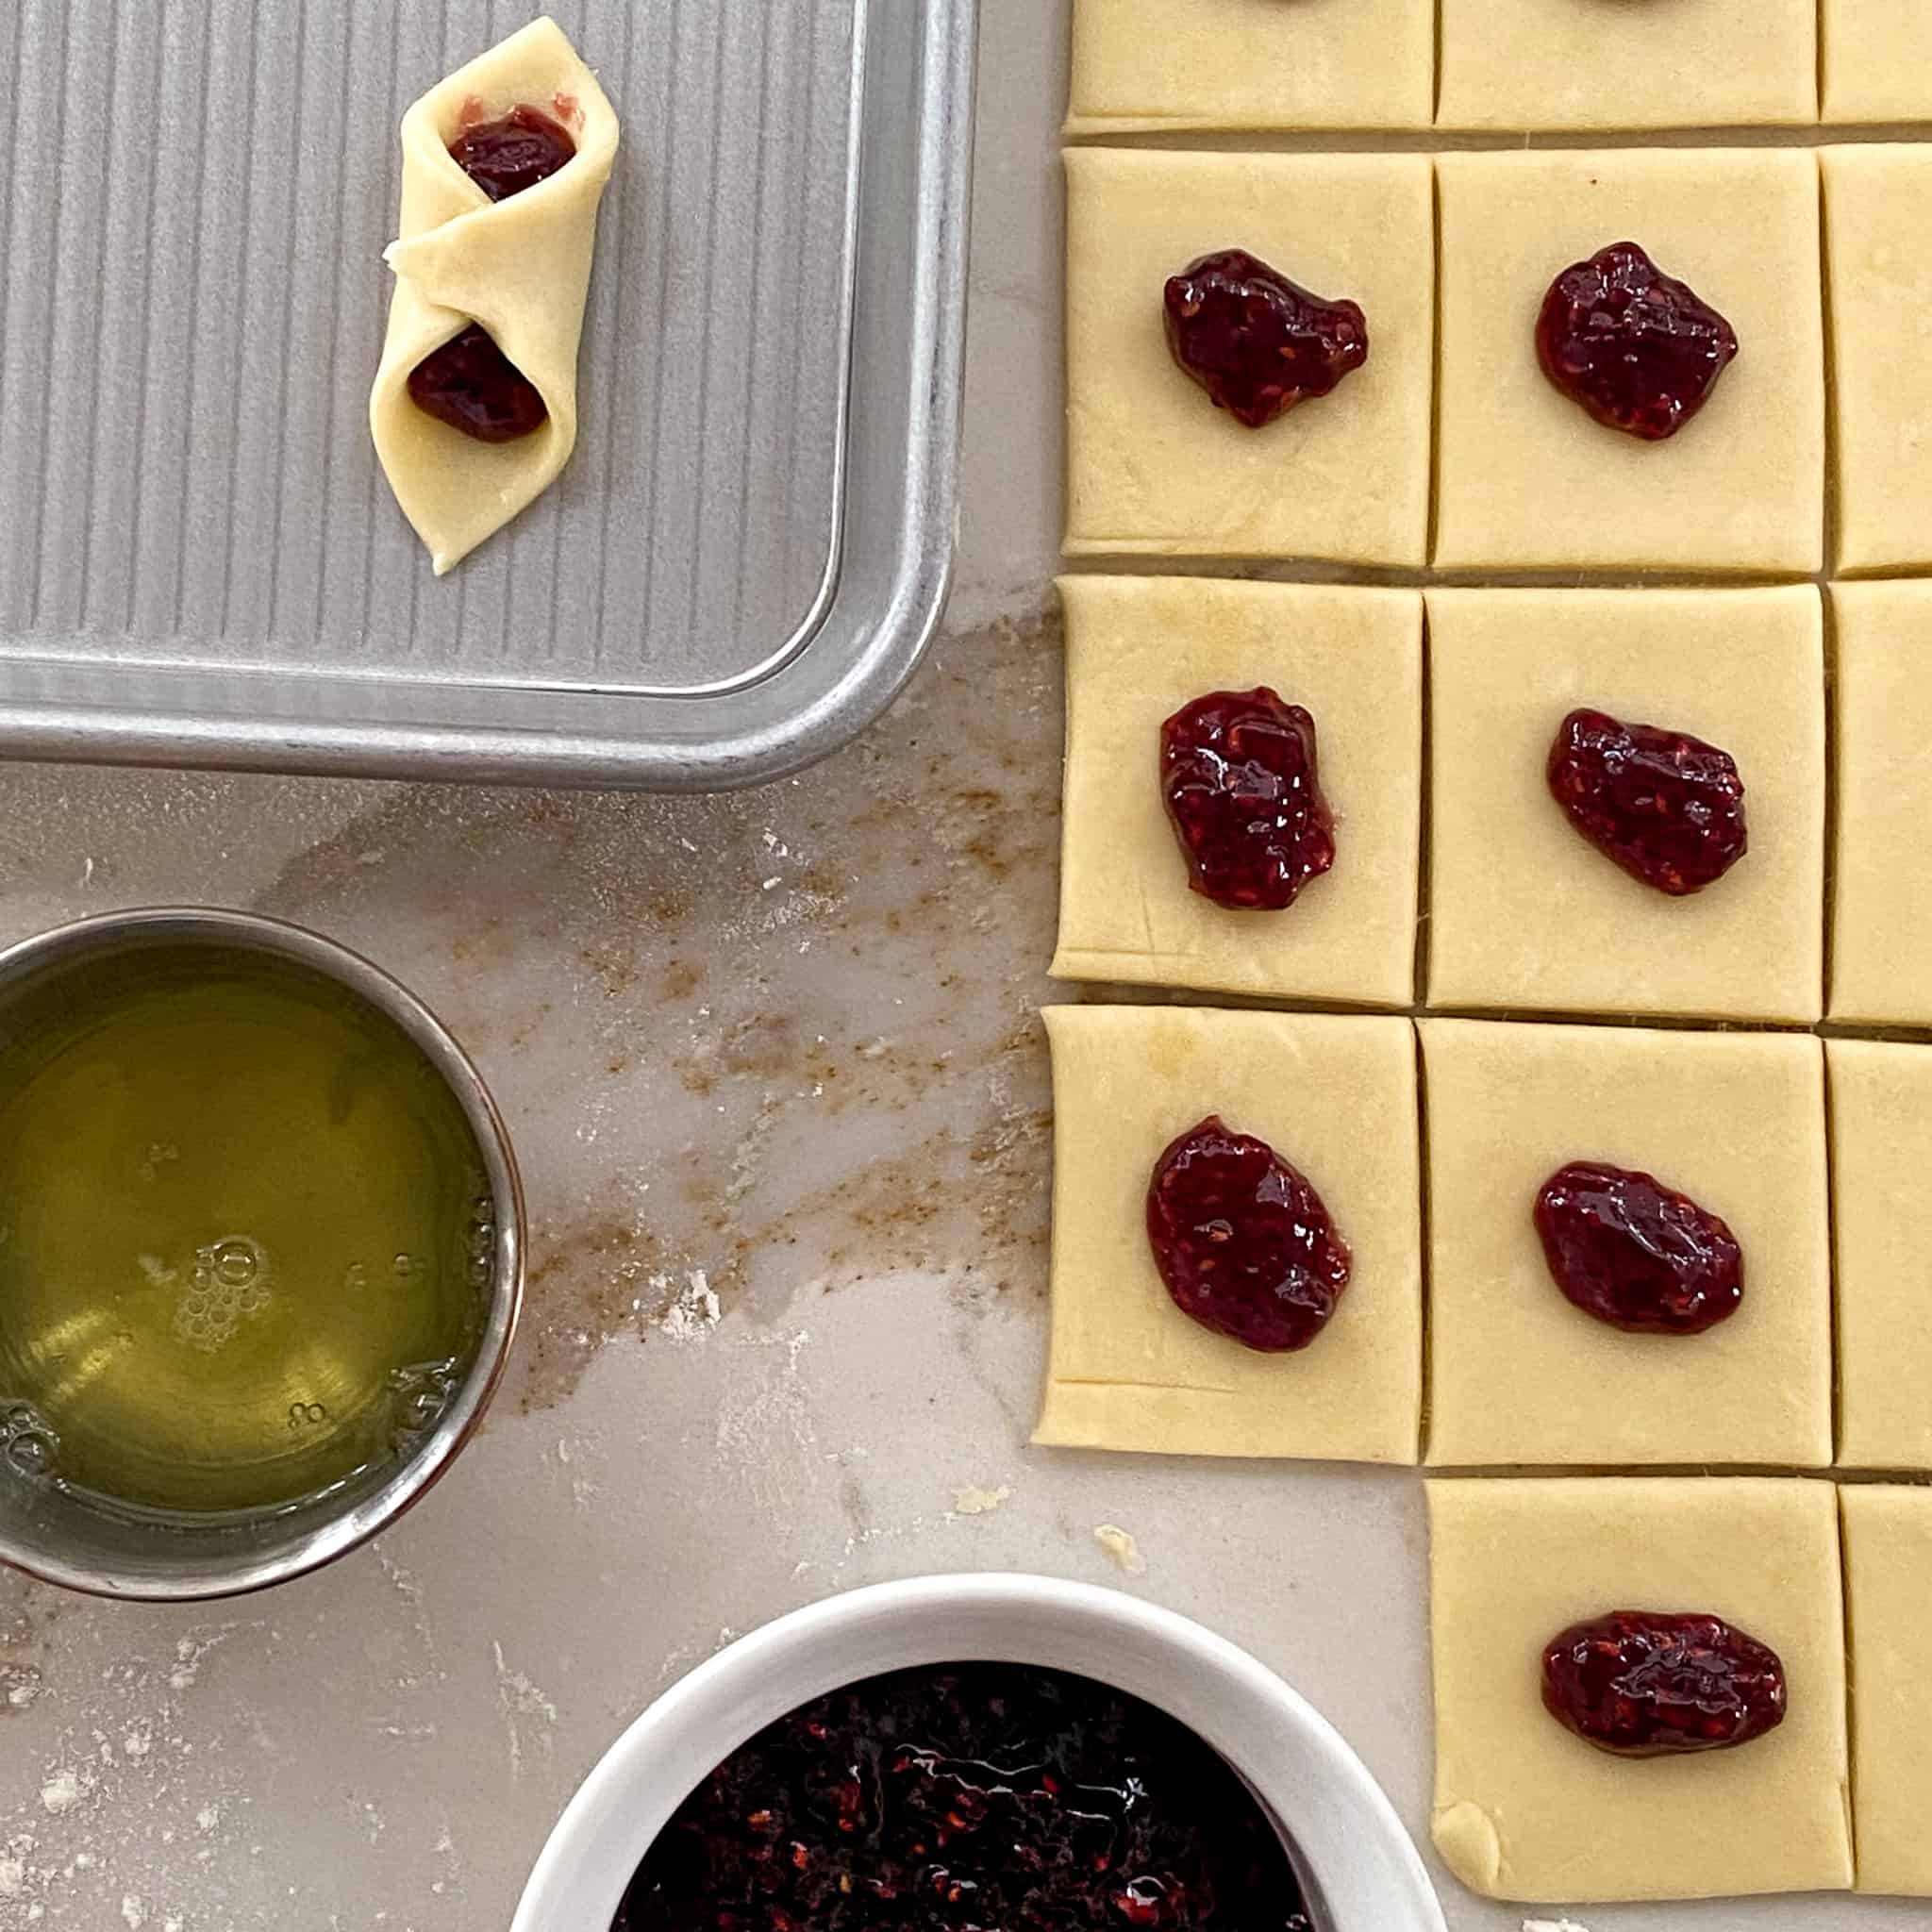 Jam spooned onto dough squares with a bowl of jam, egg white, and a folded kolaczki on a baking sheet.